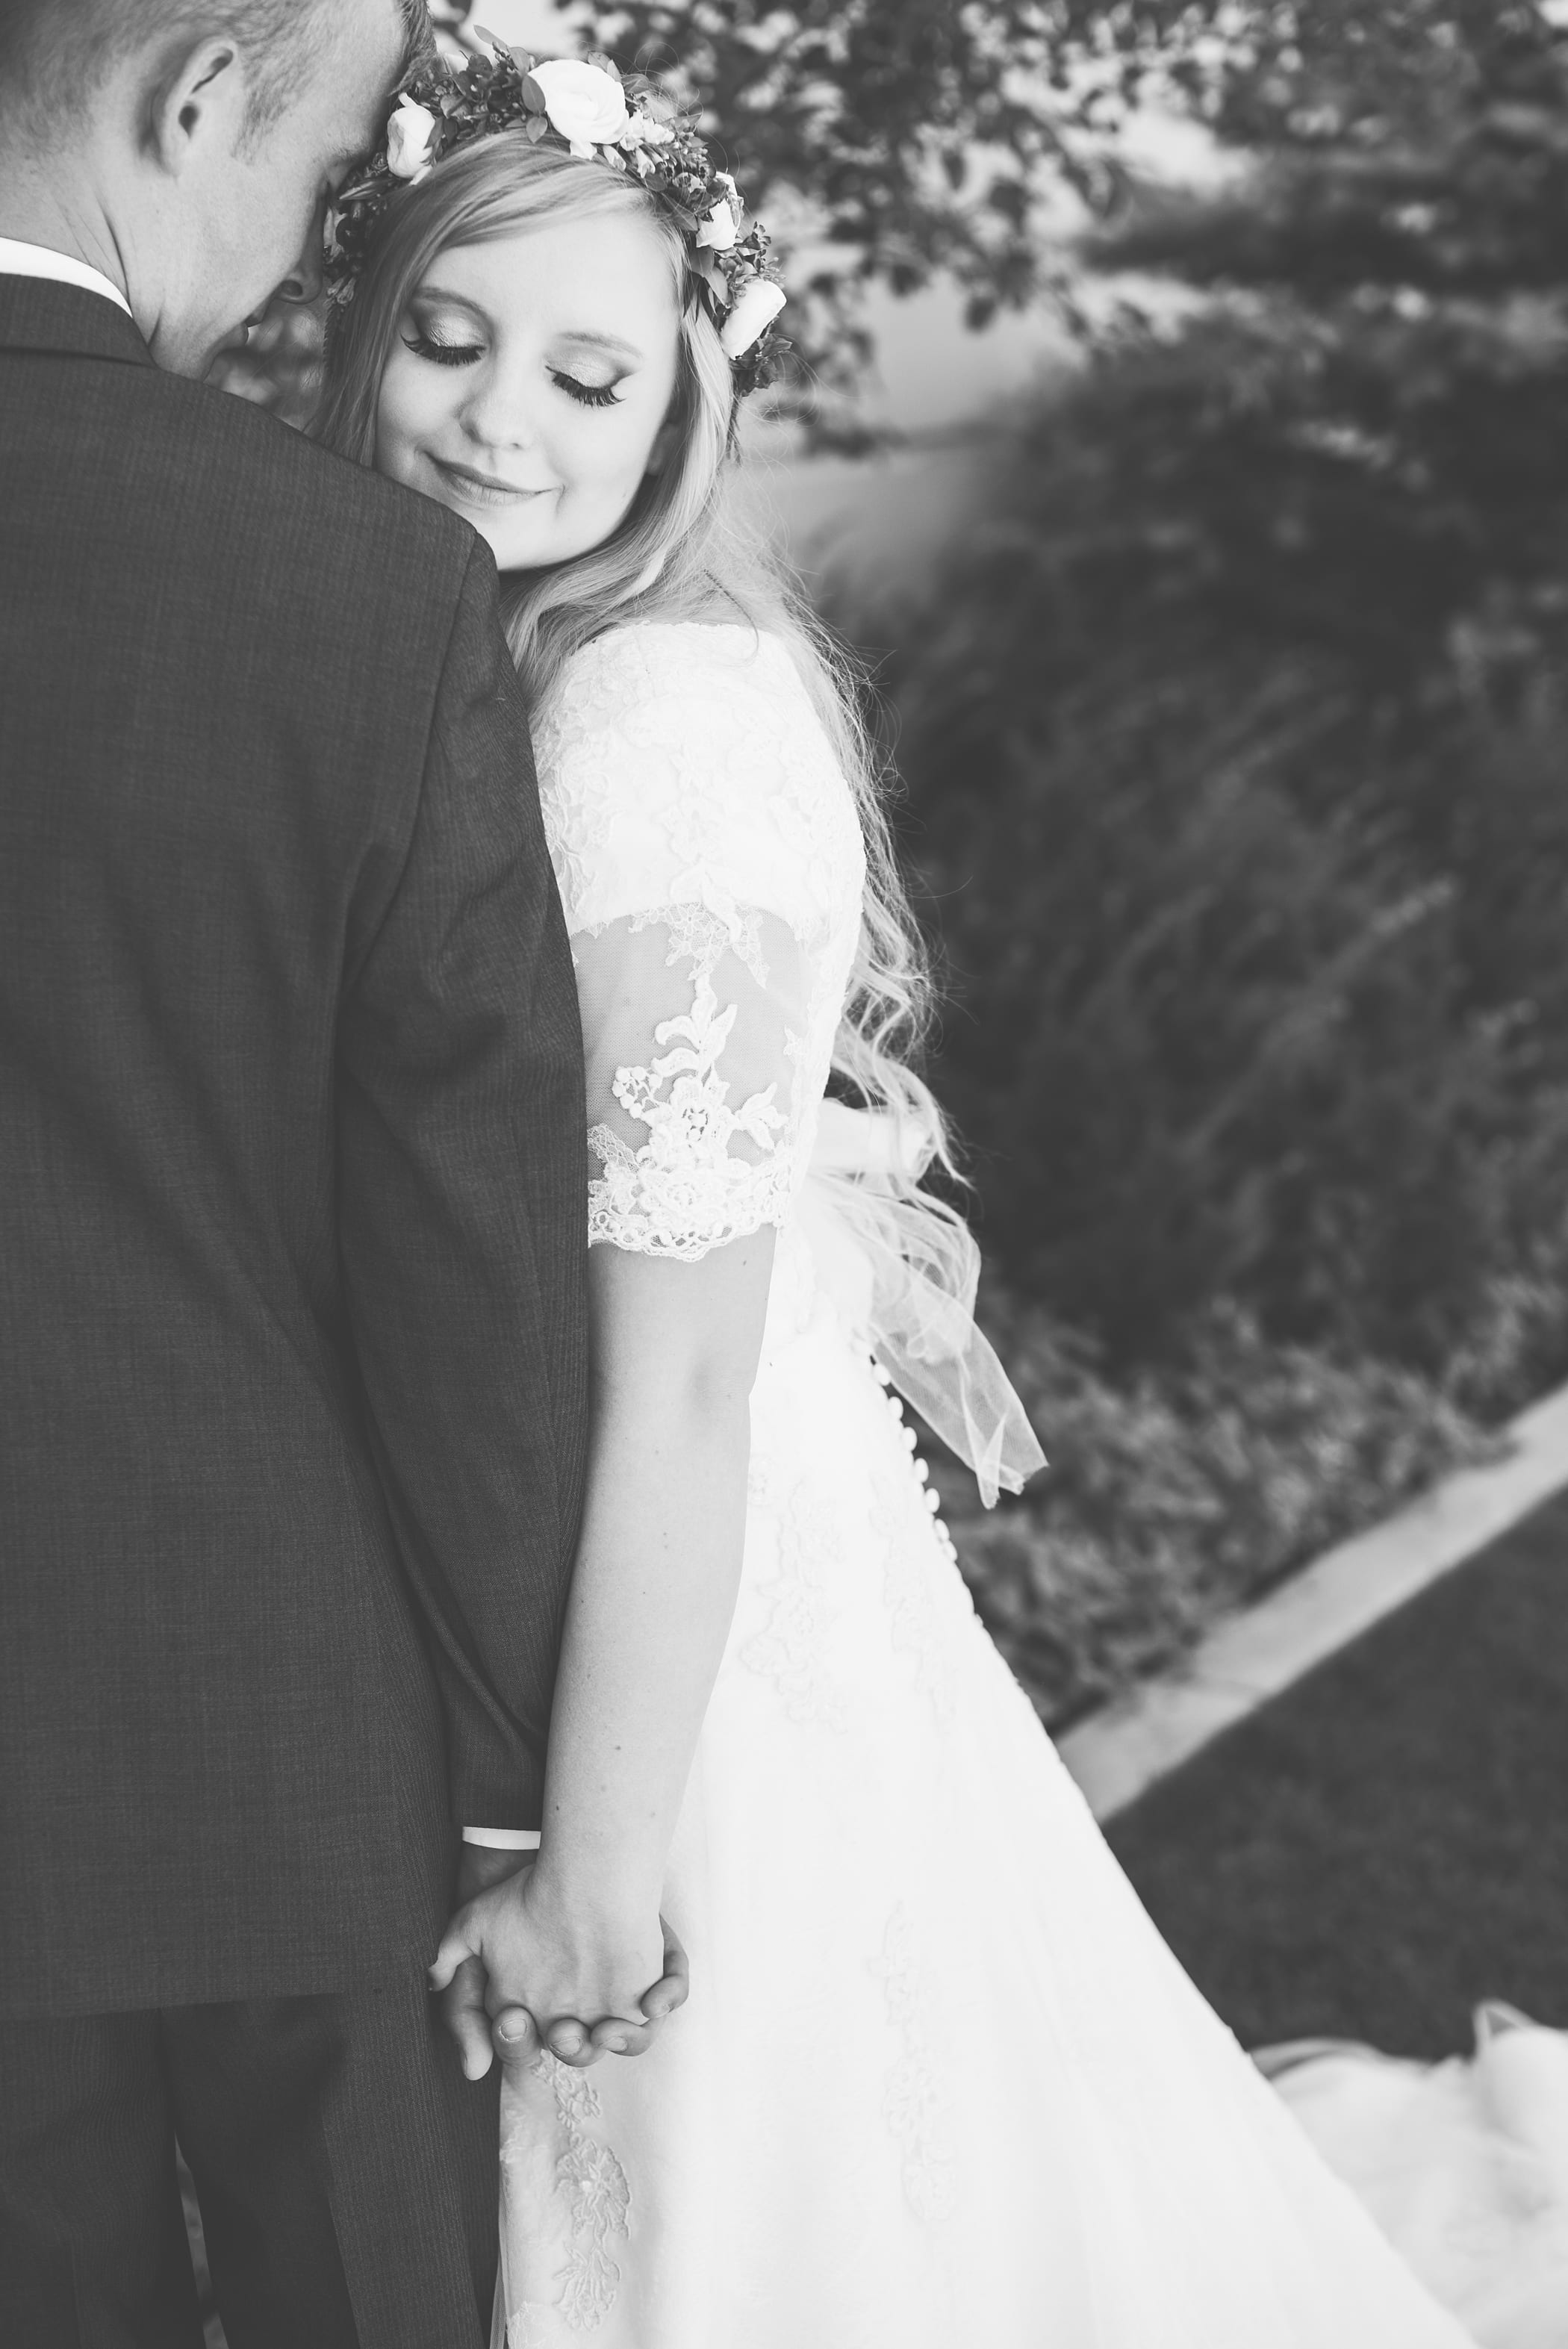 Rexburg Idaho Wedding Photographer • Michelle & Logan